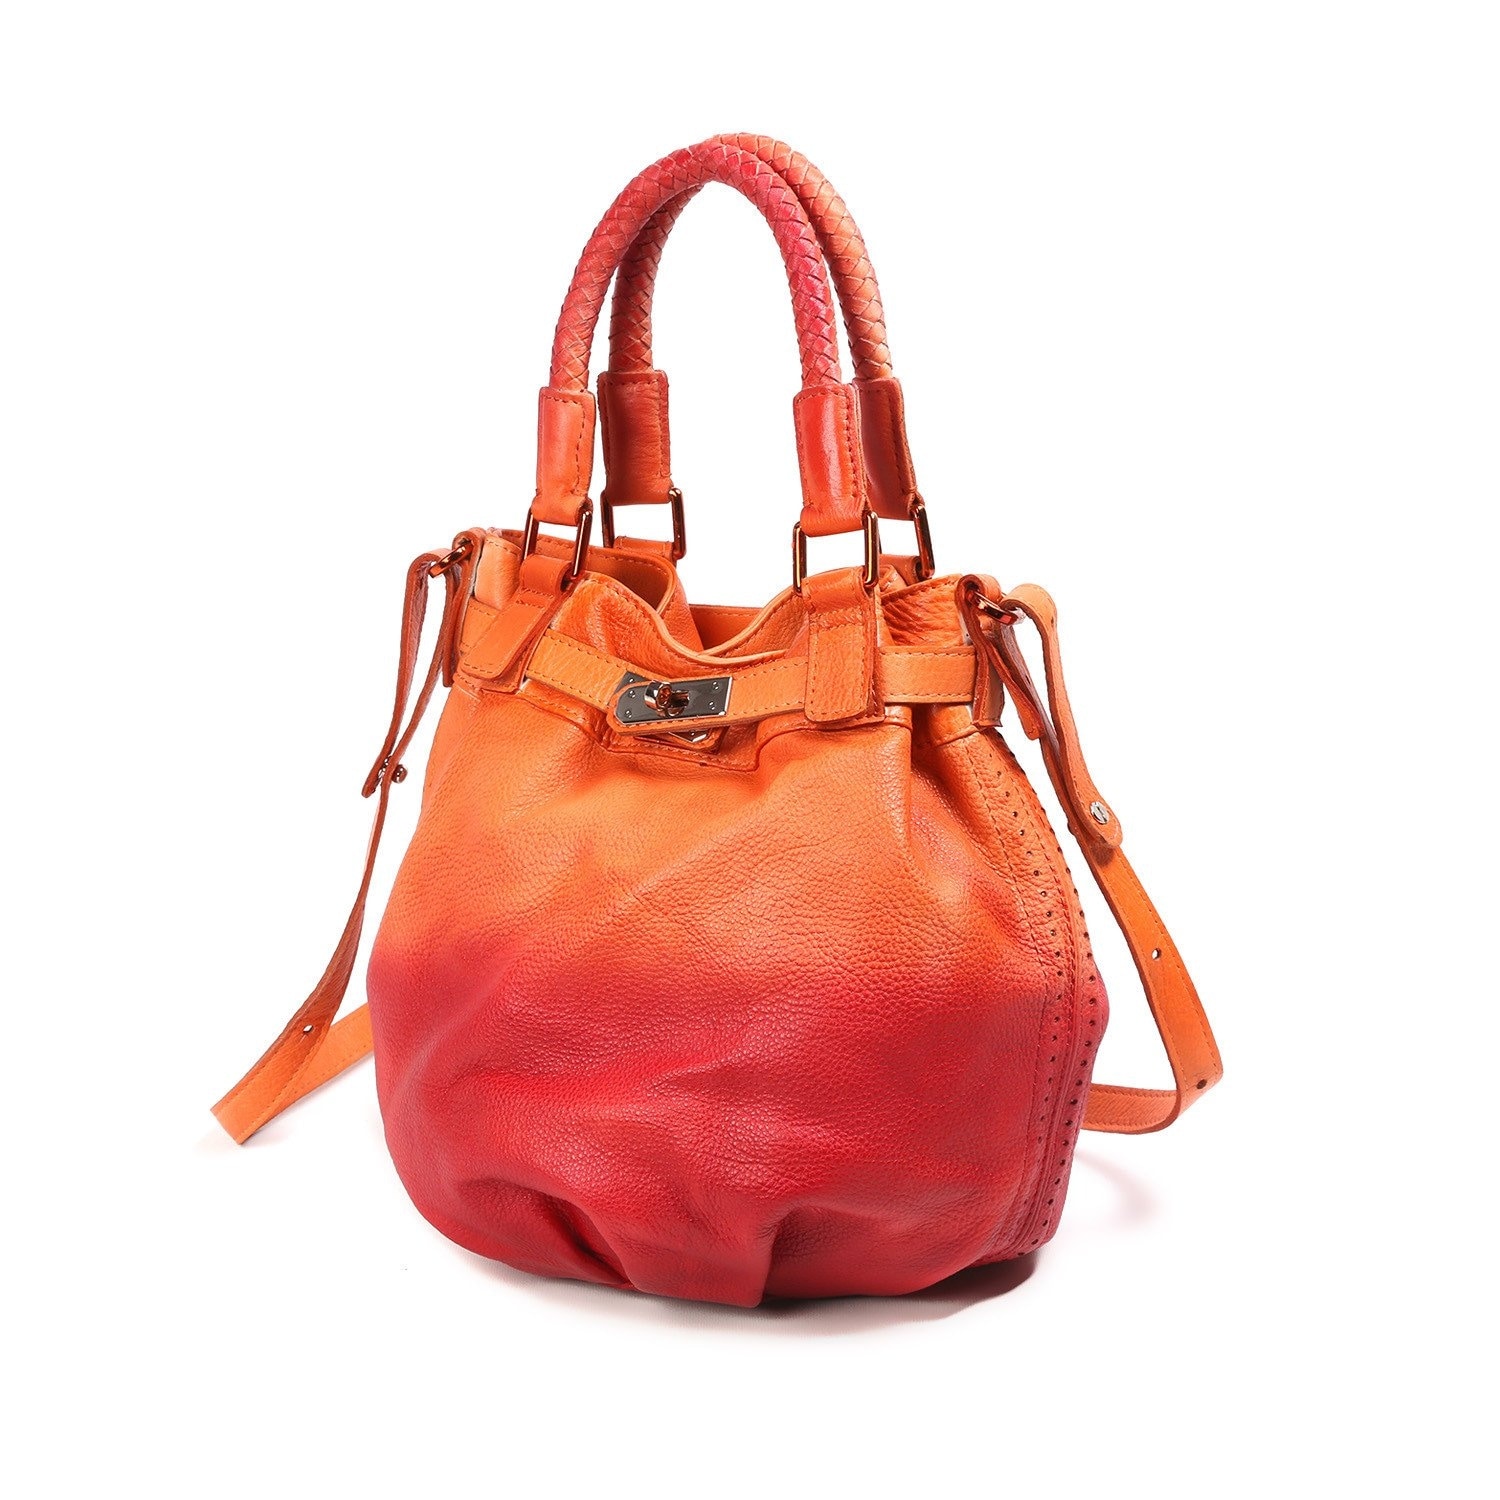 Old Trend Pumpkin Leather Bucket Tote Bag Medium | eBay